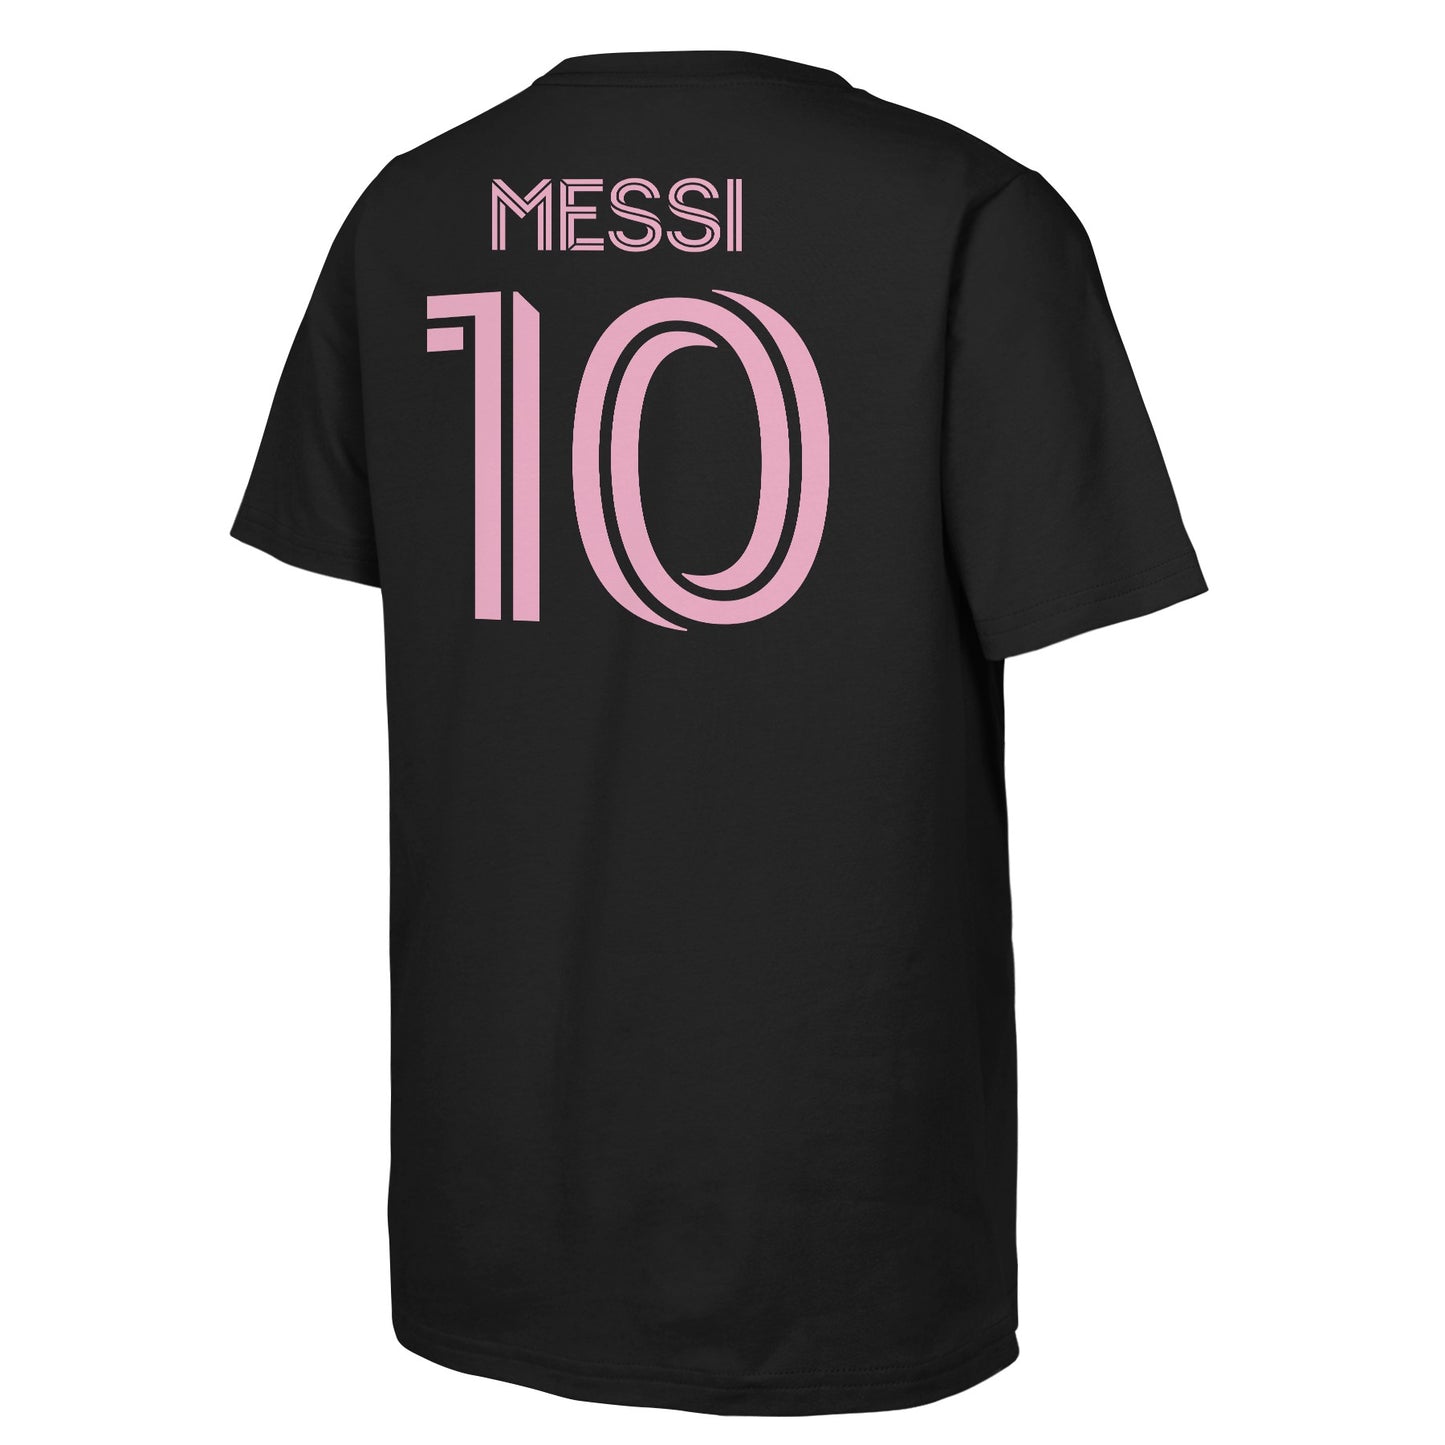 Child Lionel Messi Inter Miami Black Name & Number T-Shirt